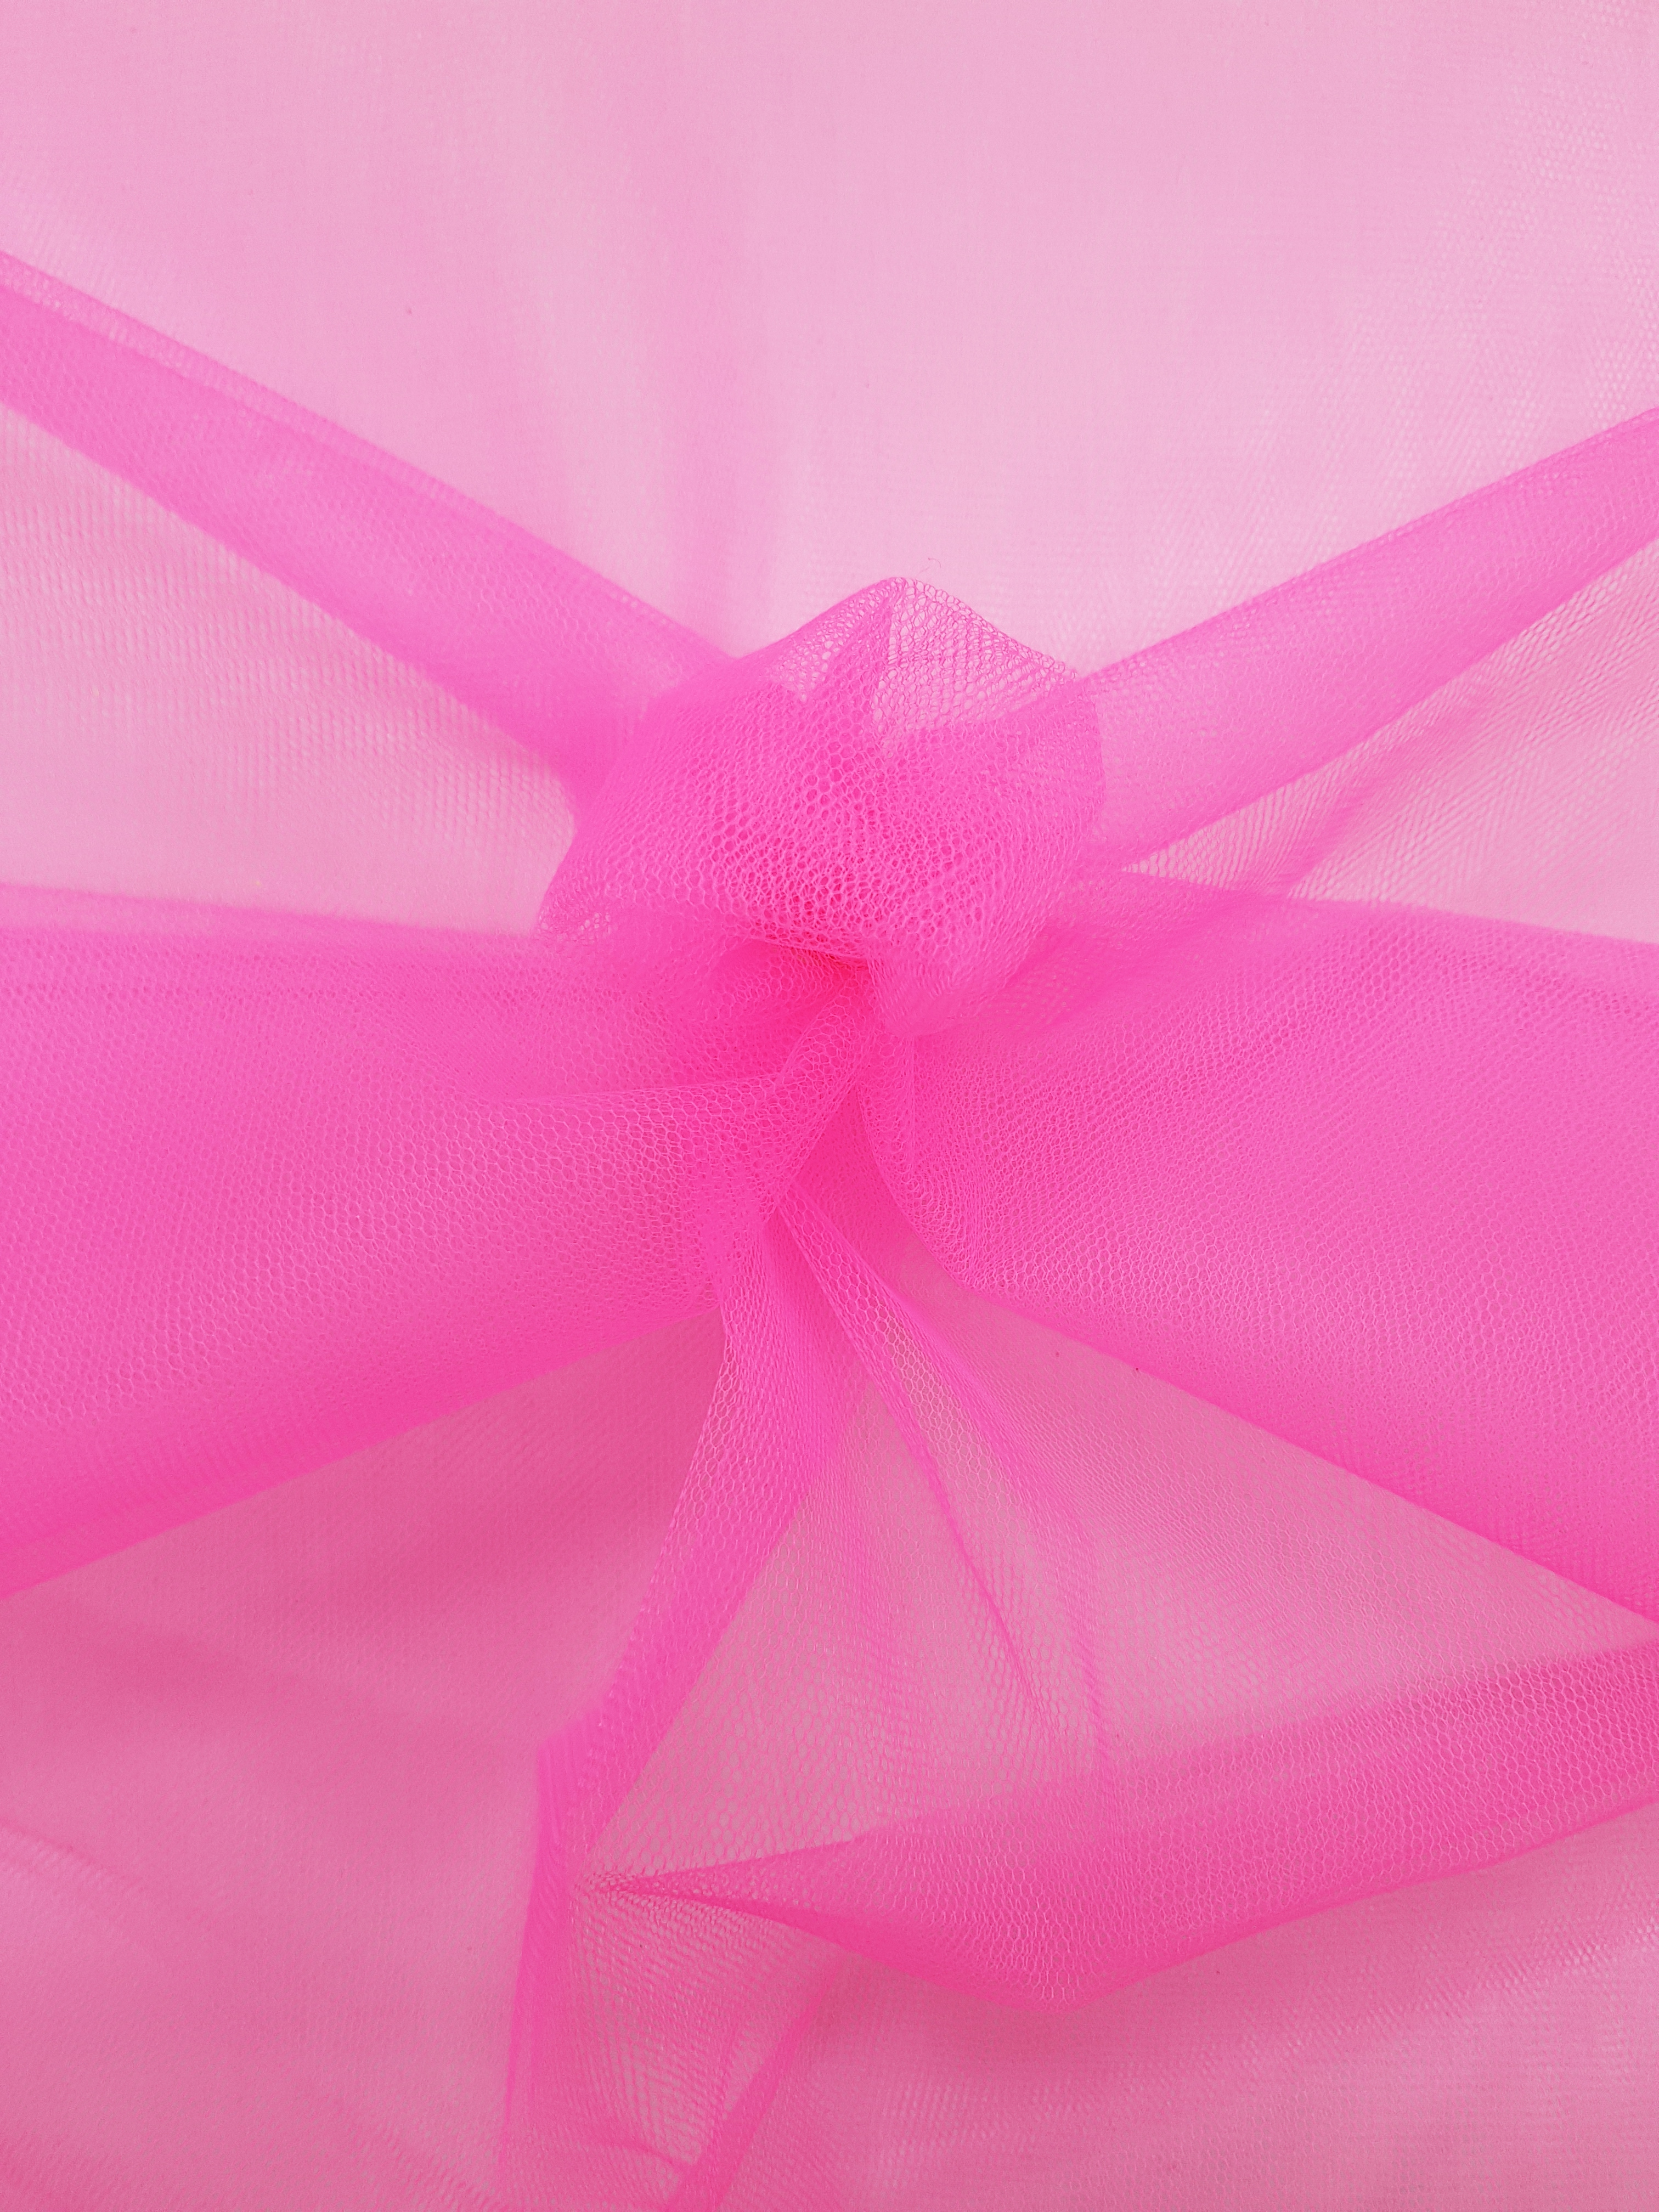 SALE - Fluorescent Rose Pink Netting Fabric - Nylon Net Mesh - Bridal ...